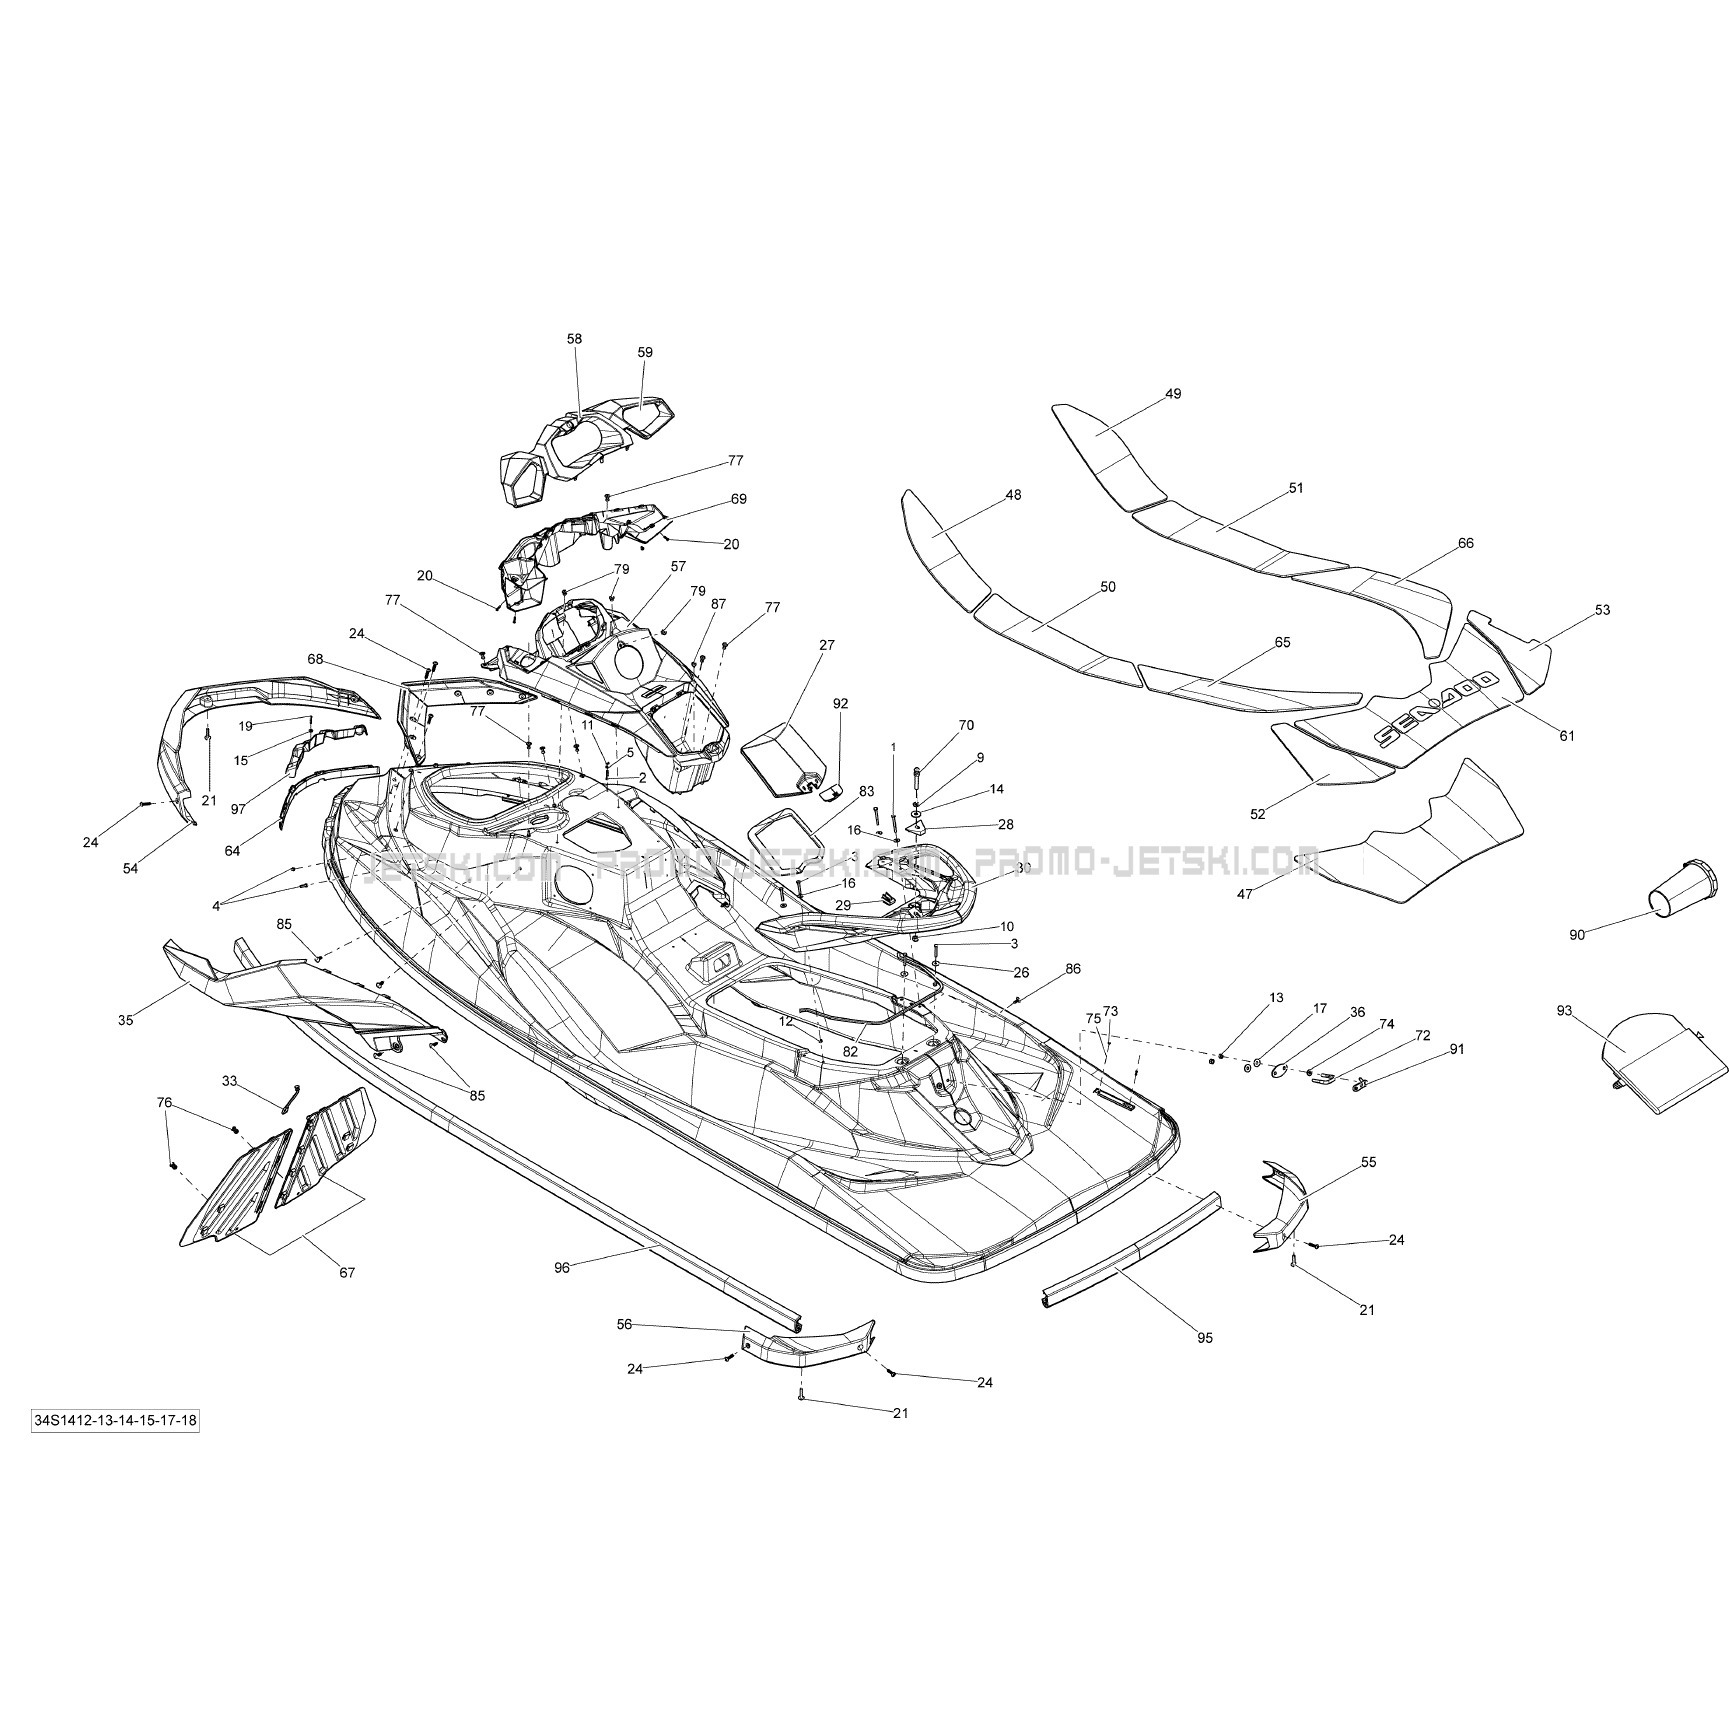 Details about   2014 14 SEADOO SEA DOO GTI LIMITED LTD 155 JET PUMP NOZZLE GUARD COVER SHROUD 